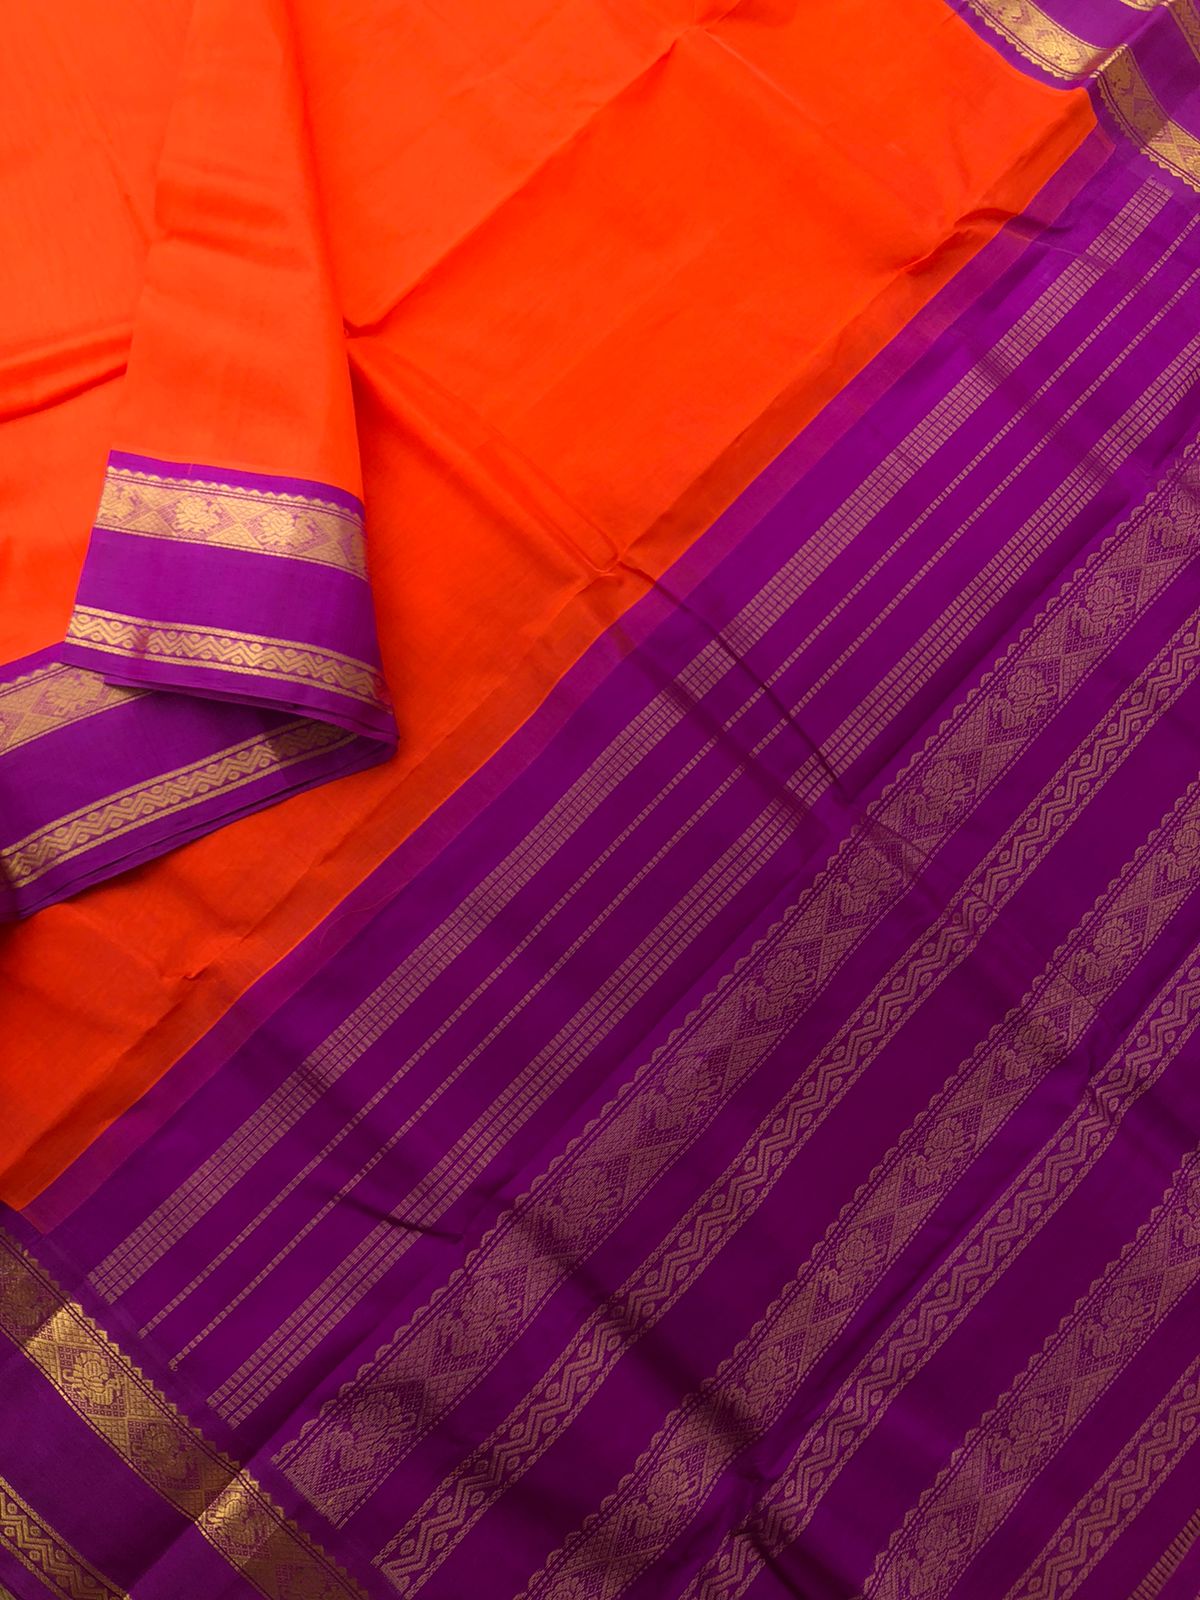 Korvai Silk Cotton - vibrant orange and purple